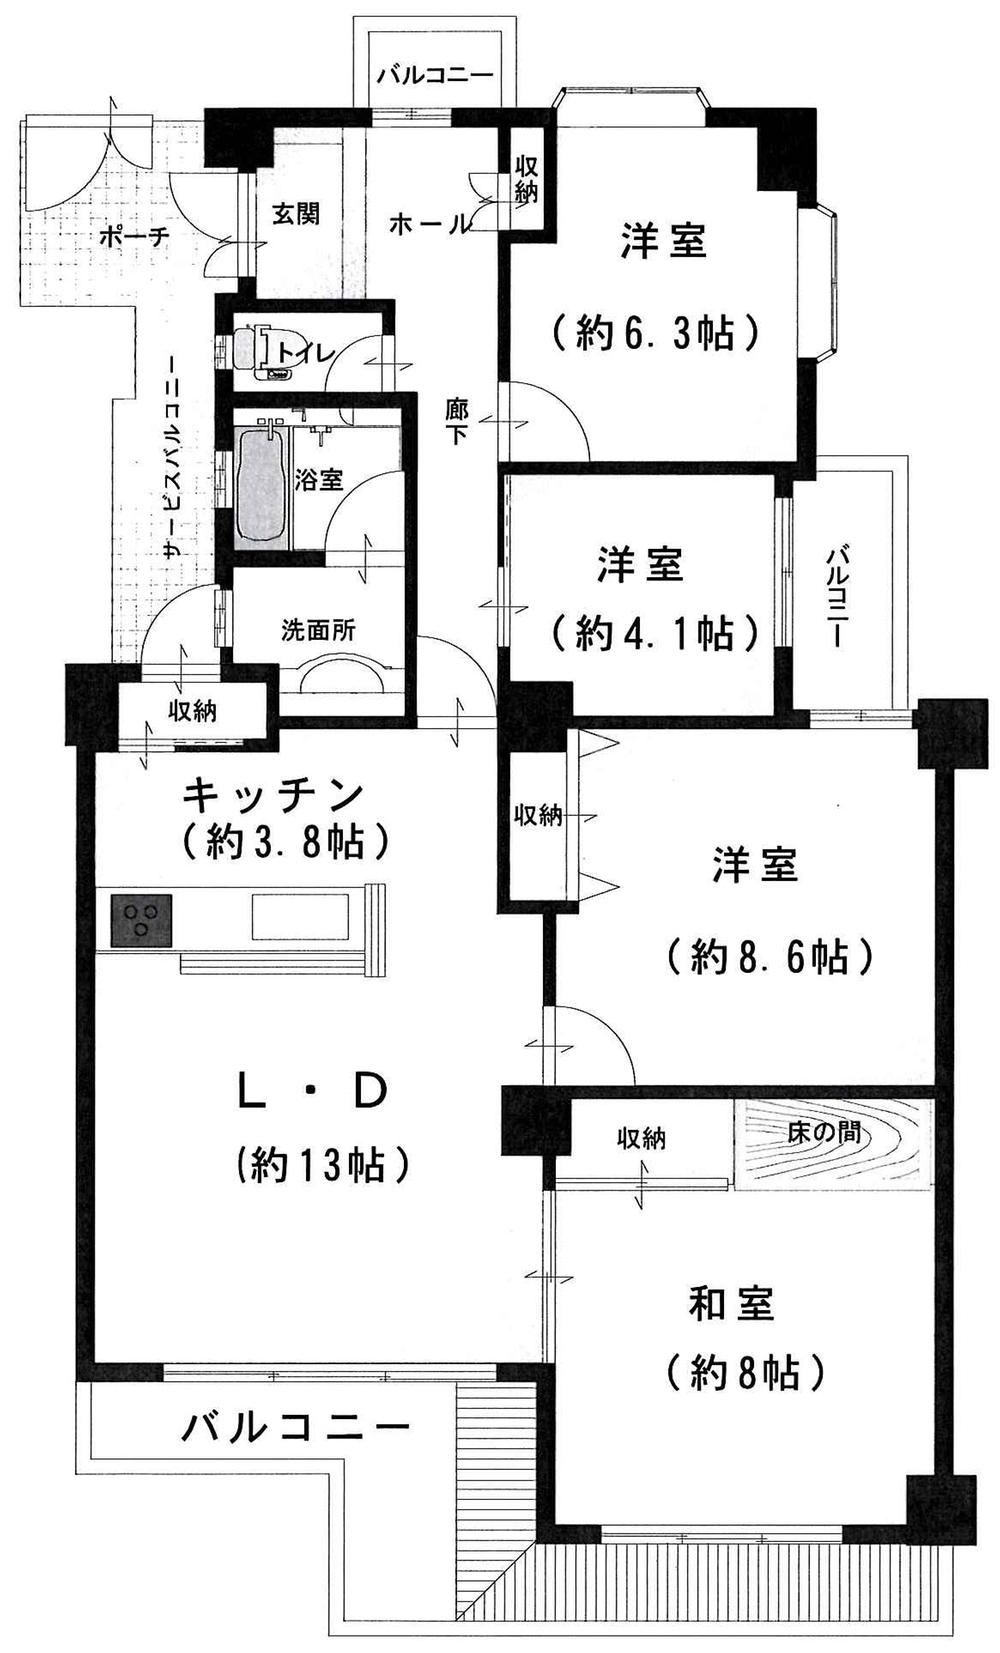 Floor plan. 4LDK, Price 29,800,000 yen, Occupied area 96.94 sq m , Balcony area 17.07 sq m